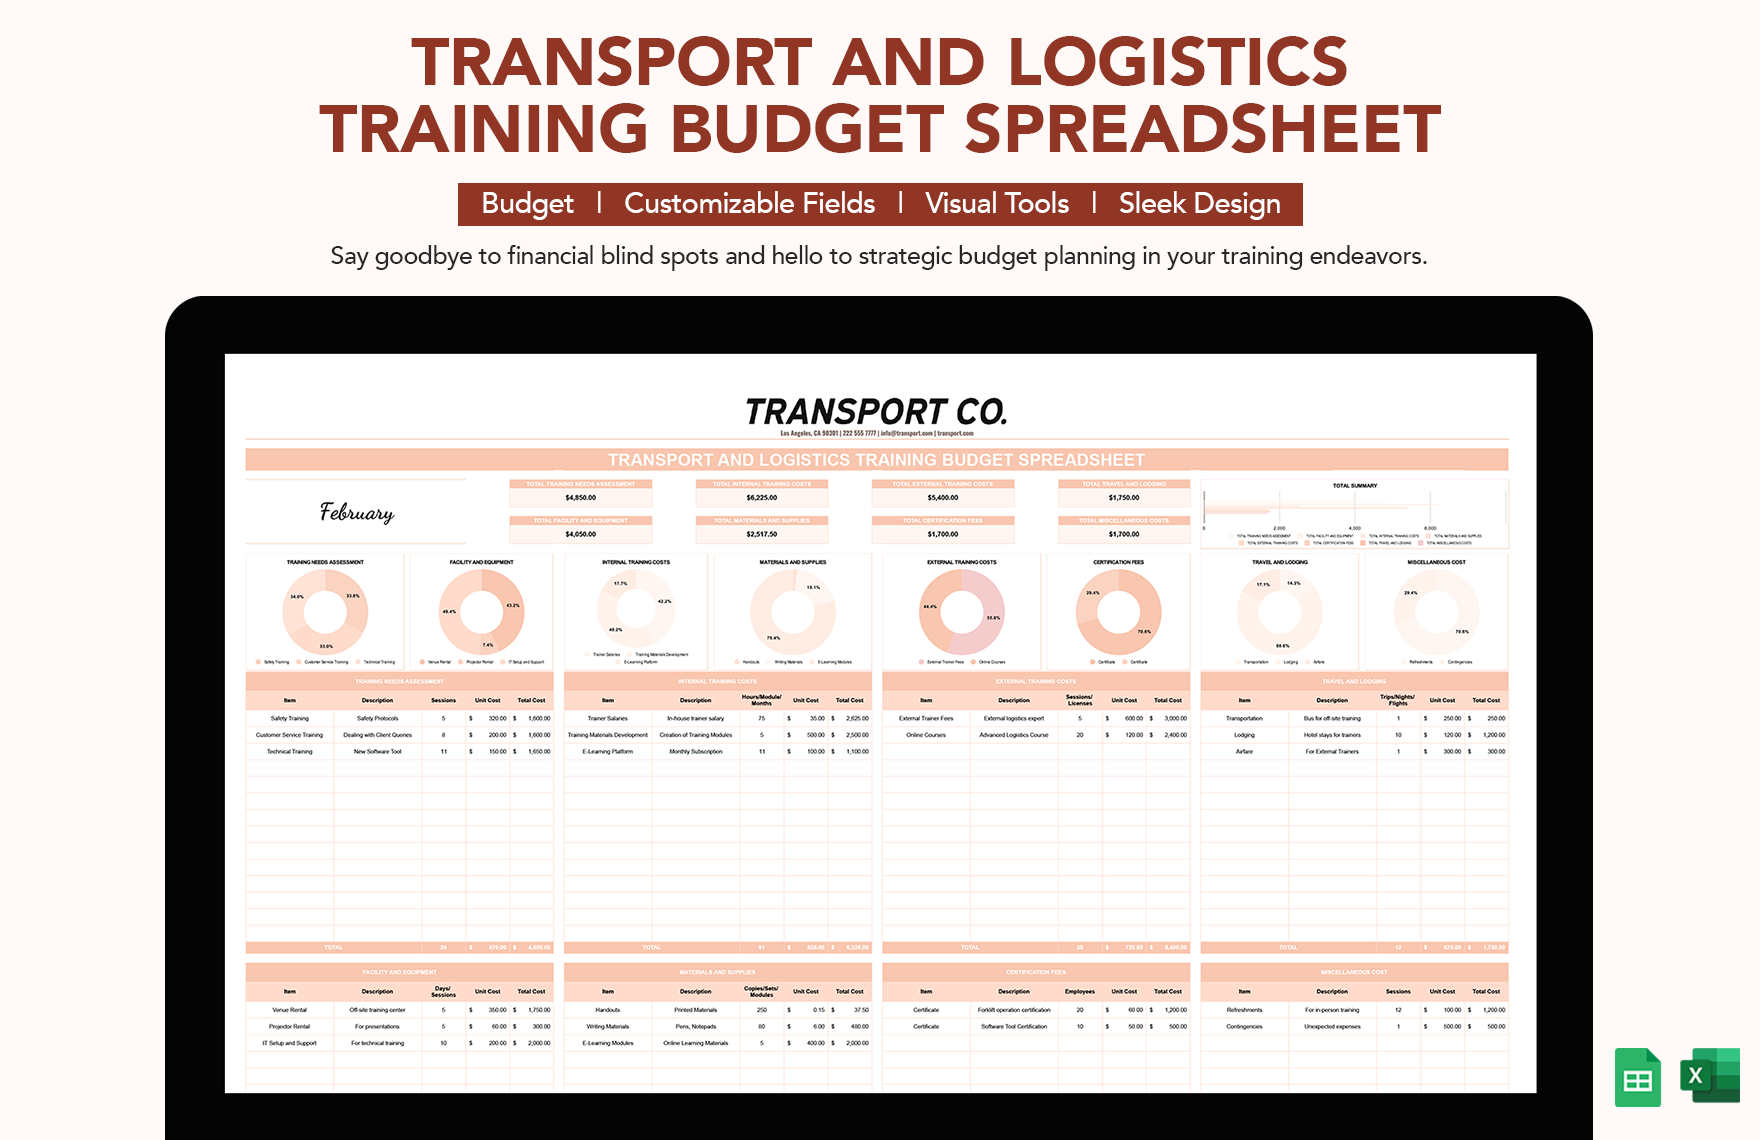 Transport and Logistics Training Budget Spreadsheet Template